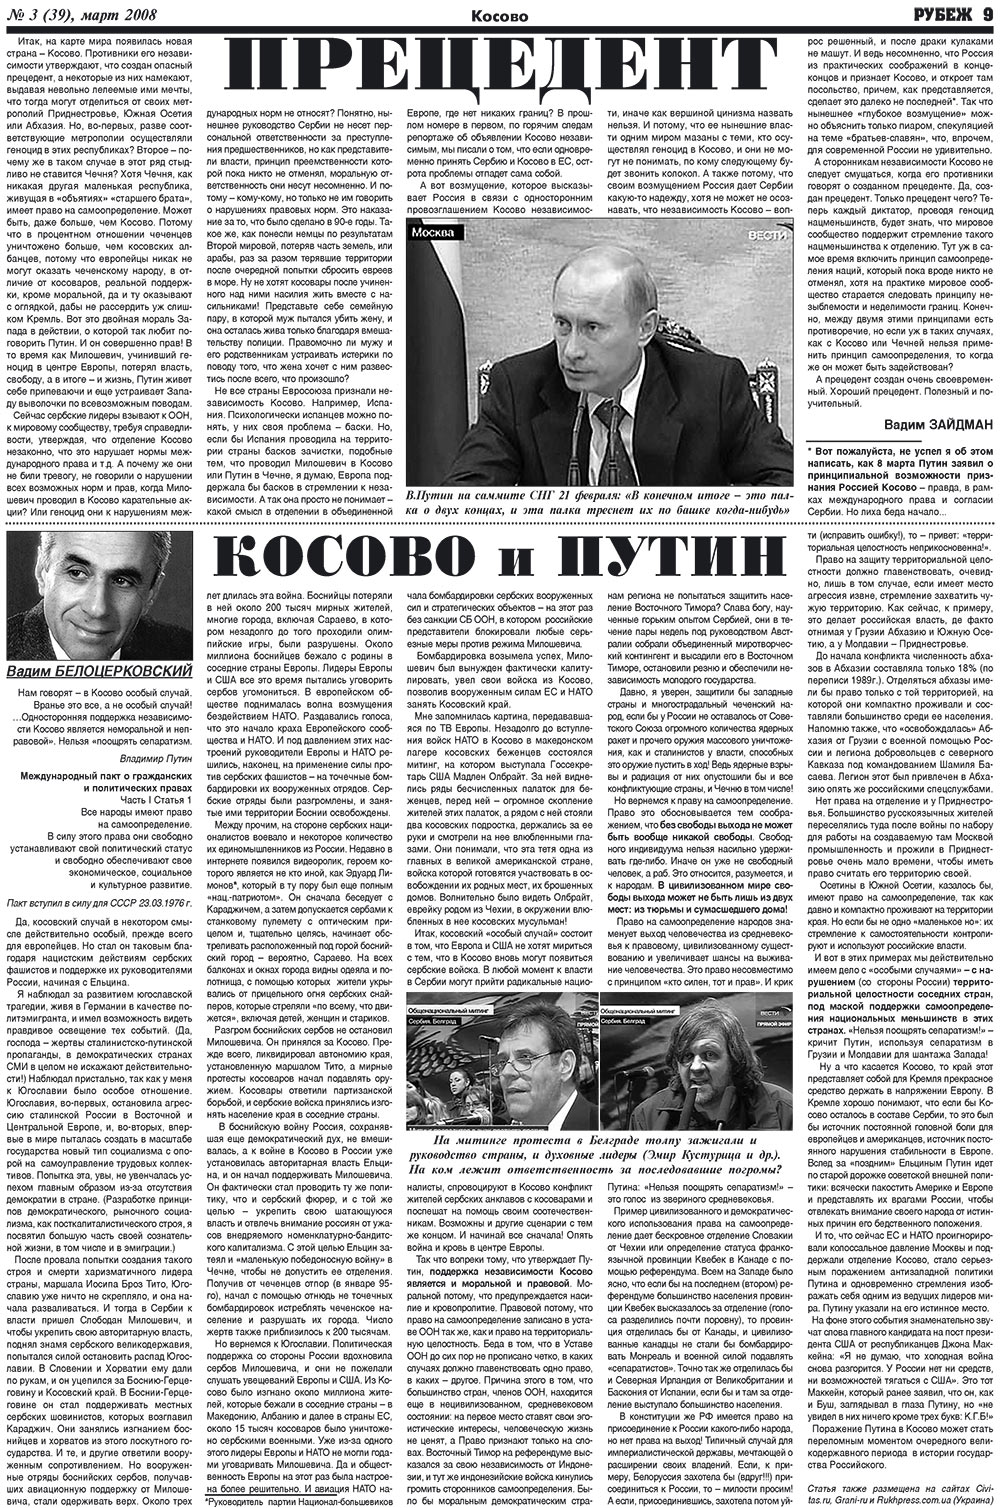 Рубеж, газета. 2008 №3 стр.9